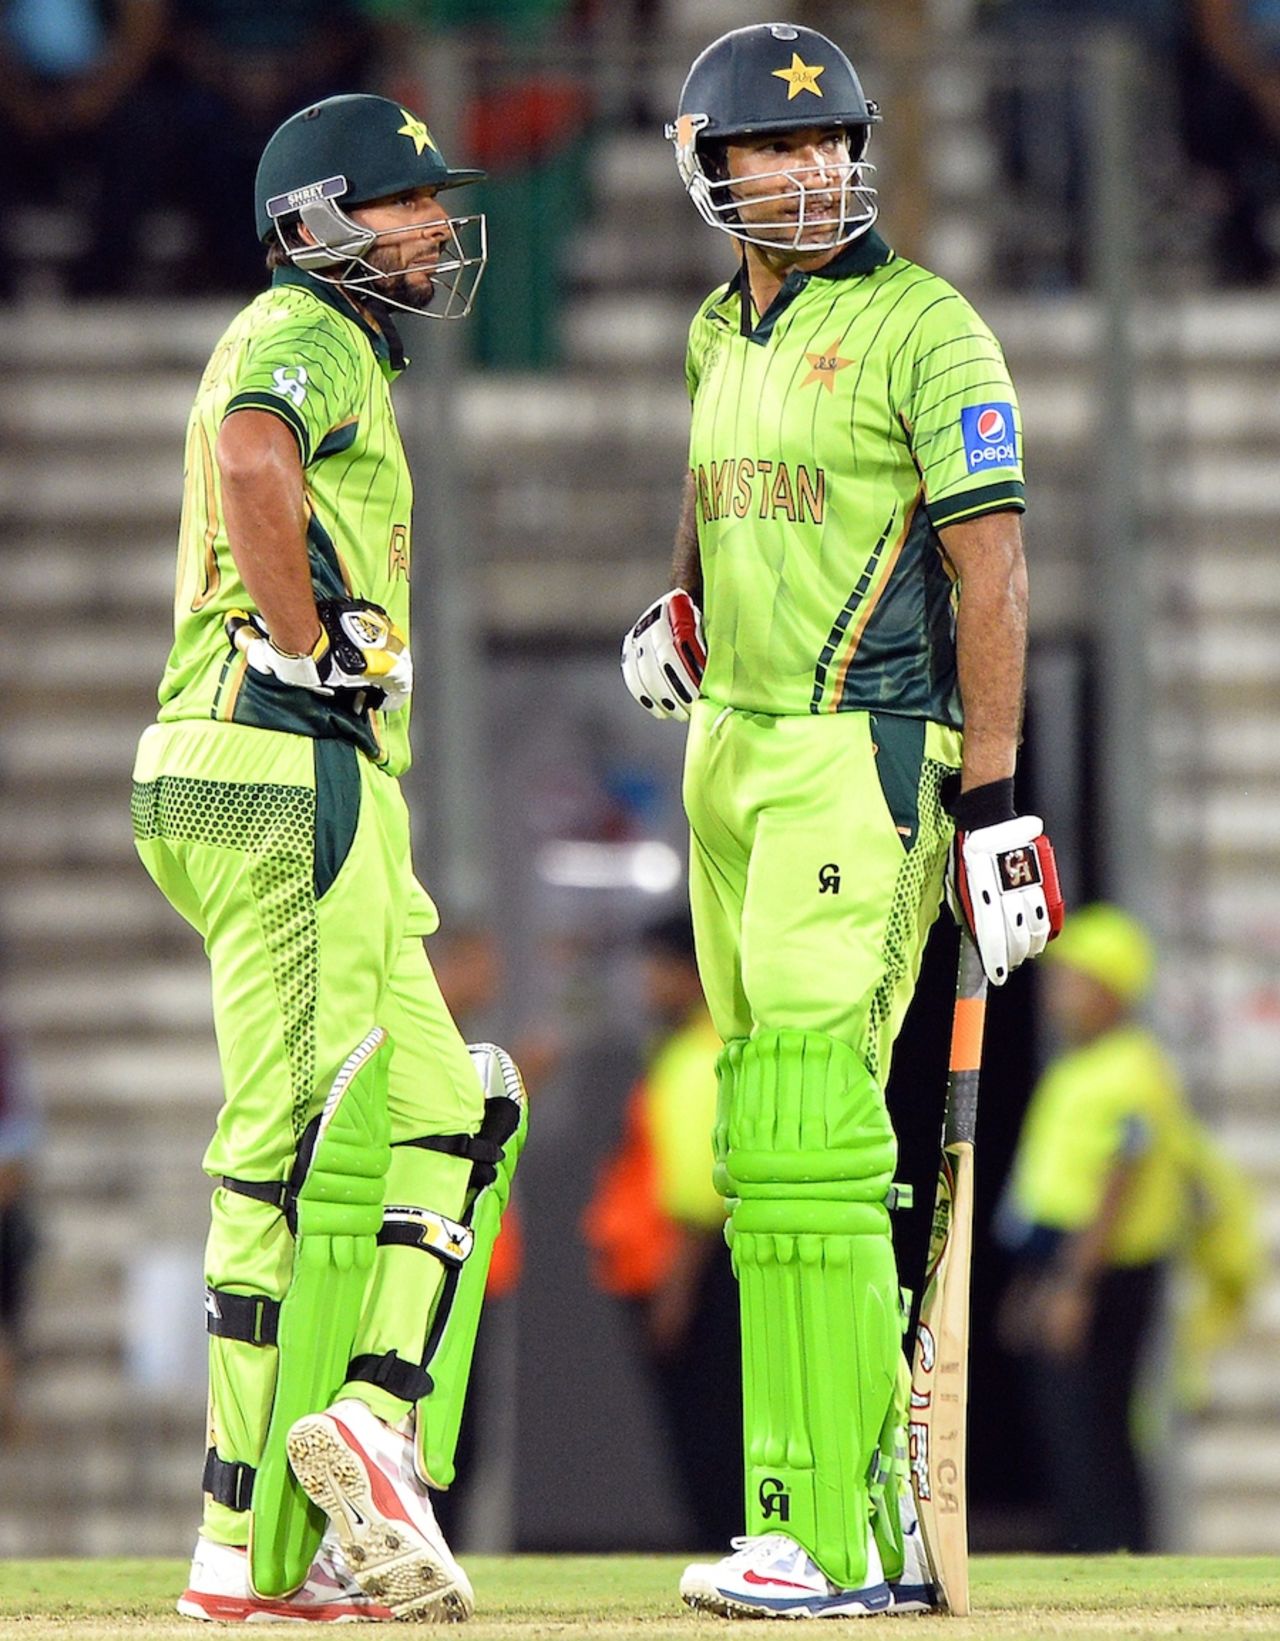 Sohaib Maqsood and Shahid Afridi shared a stand of 41 runs, Bangladesh v Pakistan, World Cup warm-ups, Sydney, February 9, 2015